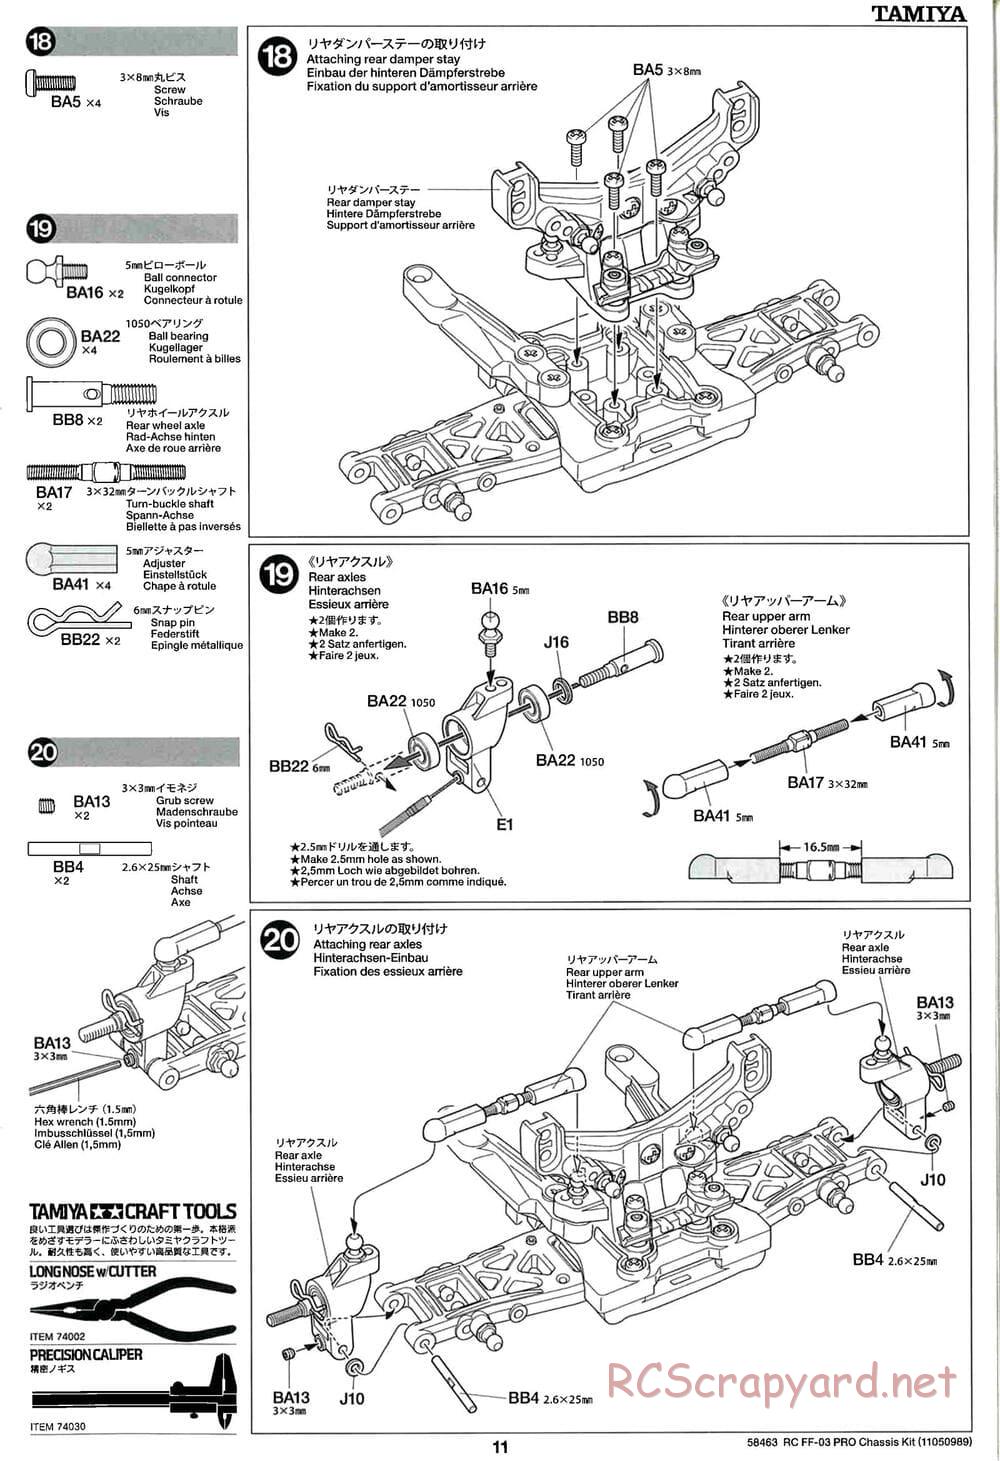 Tamiya - FF-03 Pro Chassis - Manual - Page 11